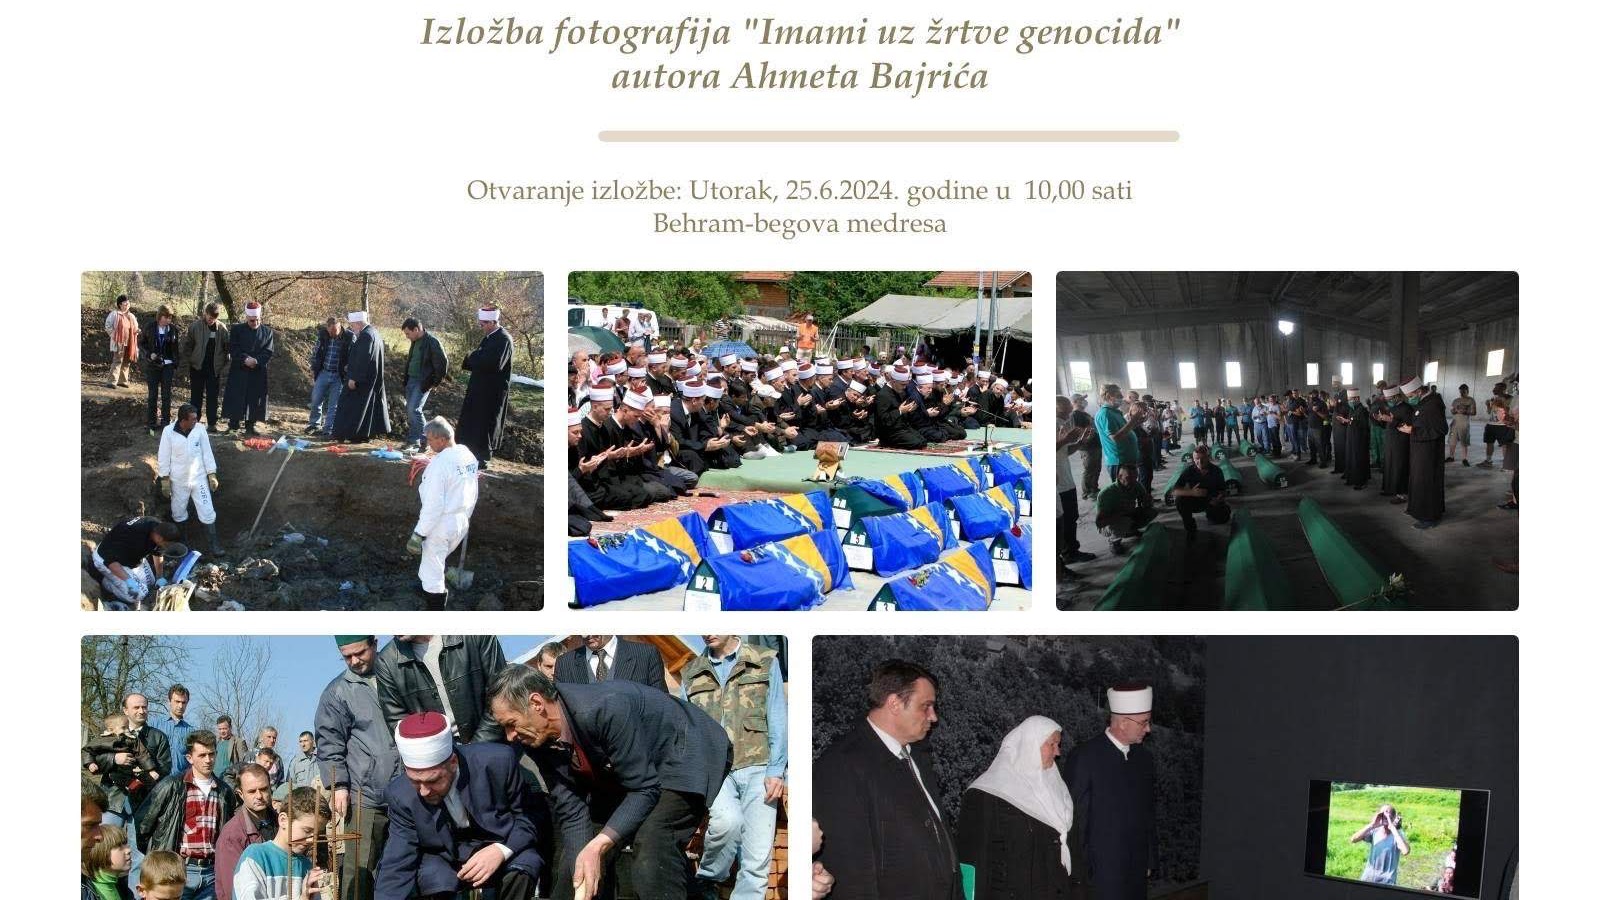 Sutra u Tuzli izložba fotografija "Imami uz žrtve genocida" autora Ahmeta Bajrića 